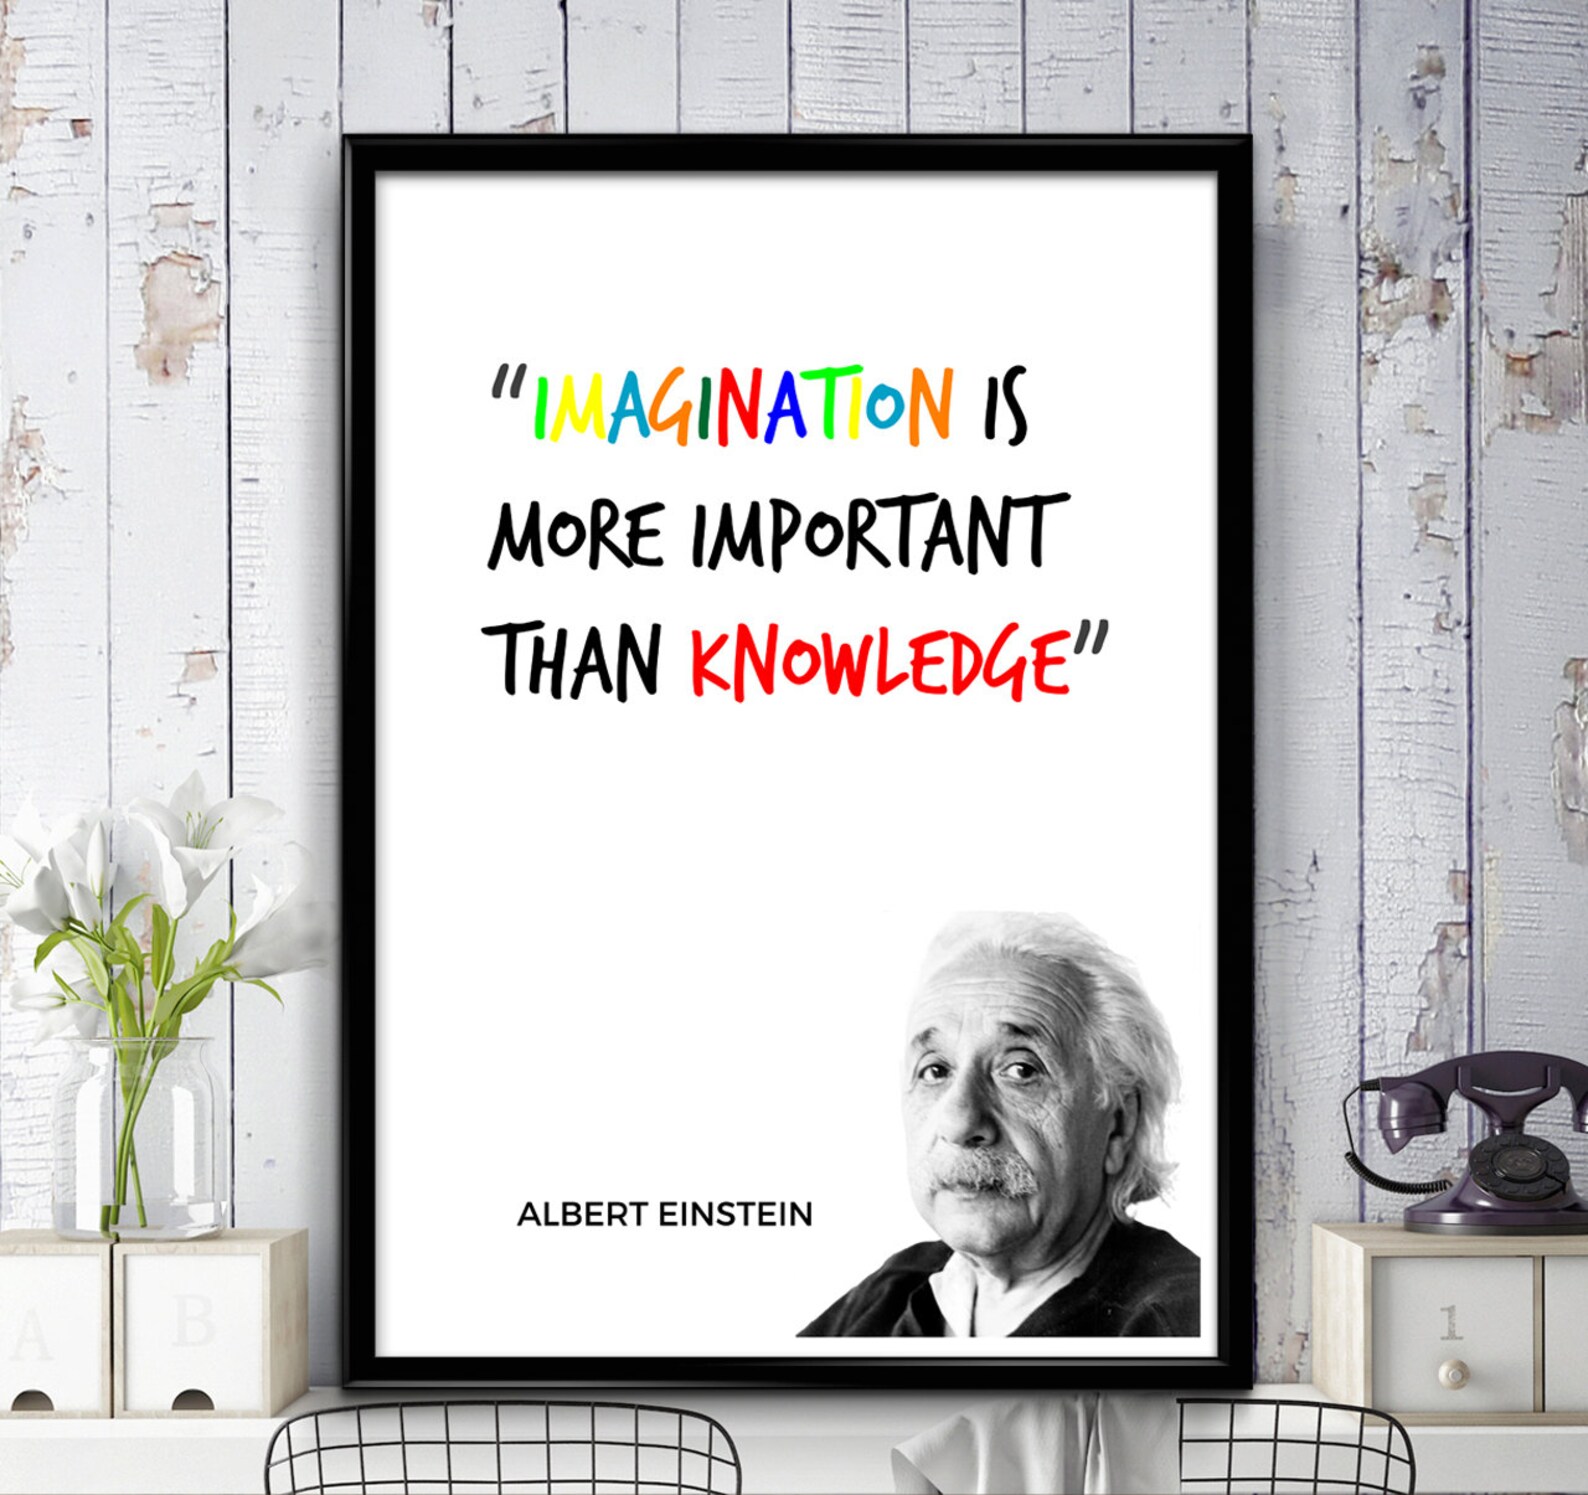 Imagination most. Эйнштейн о воображении. Цитата Эйнштейна про воображение.